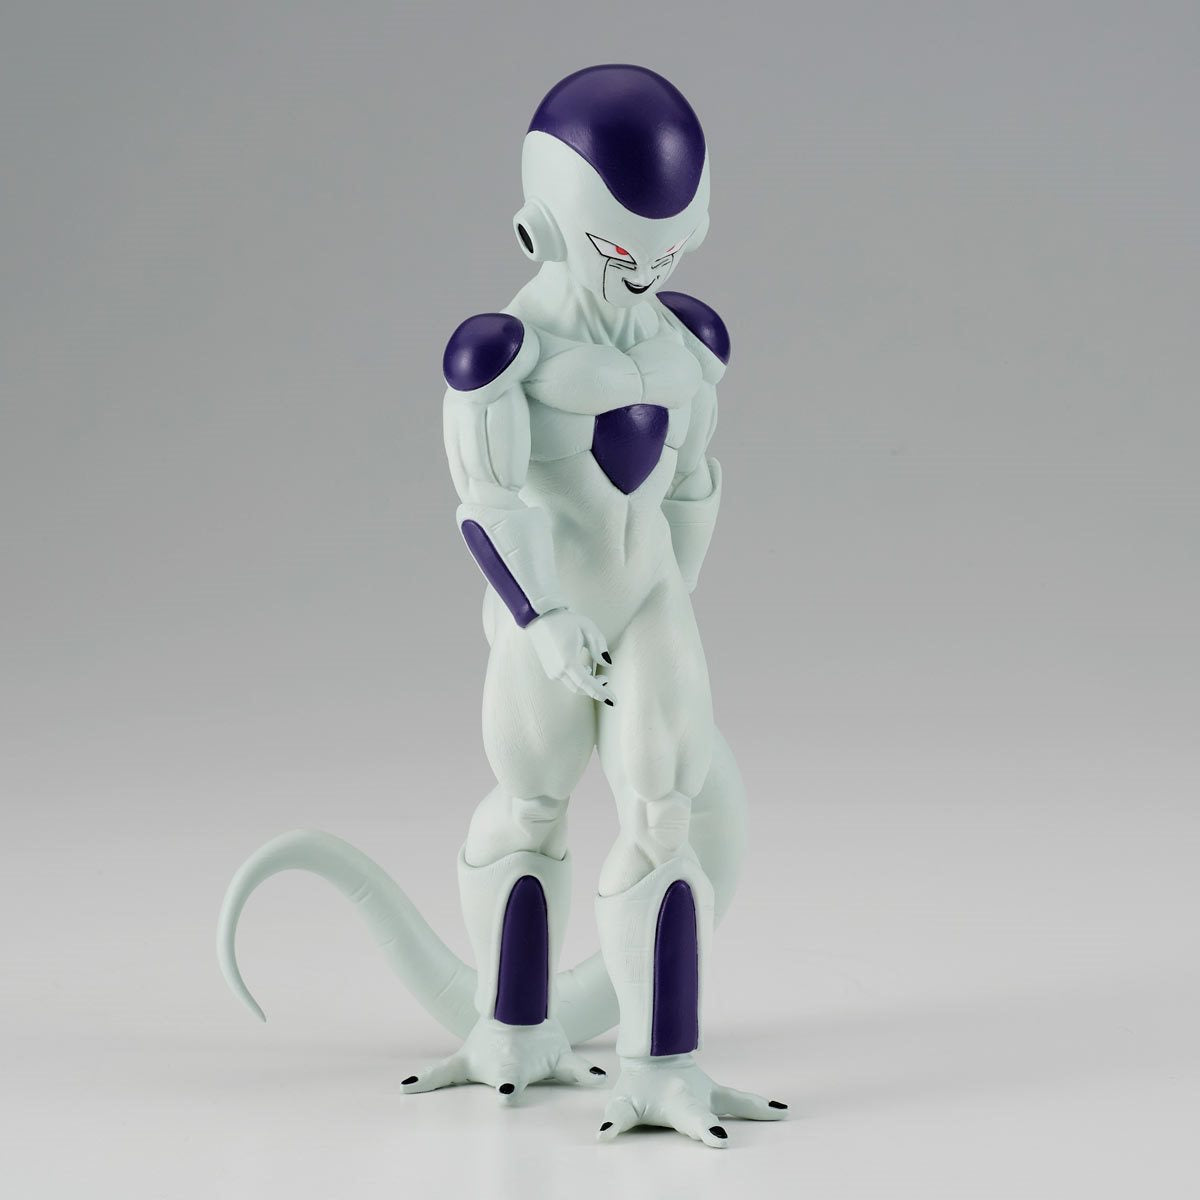 Frieza figure presented by Banpresto through their Solid Edge Works series. 